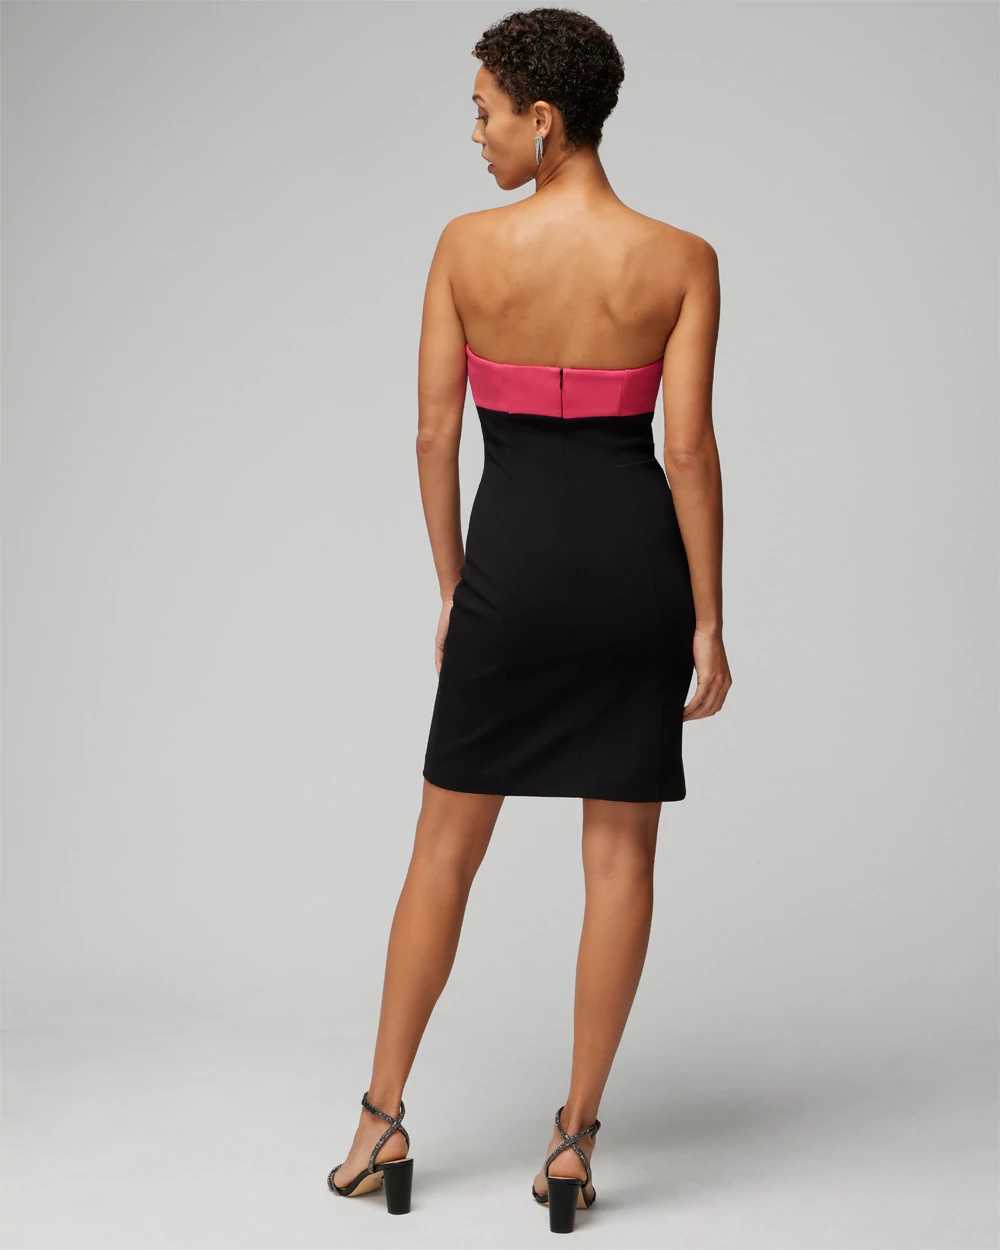 Petite Strapless Colorblock Tuxedo Mini Dress click to view larger image.